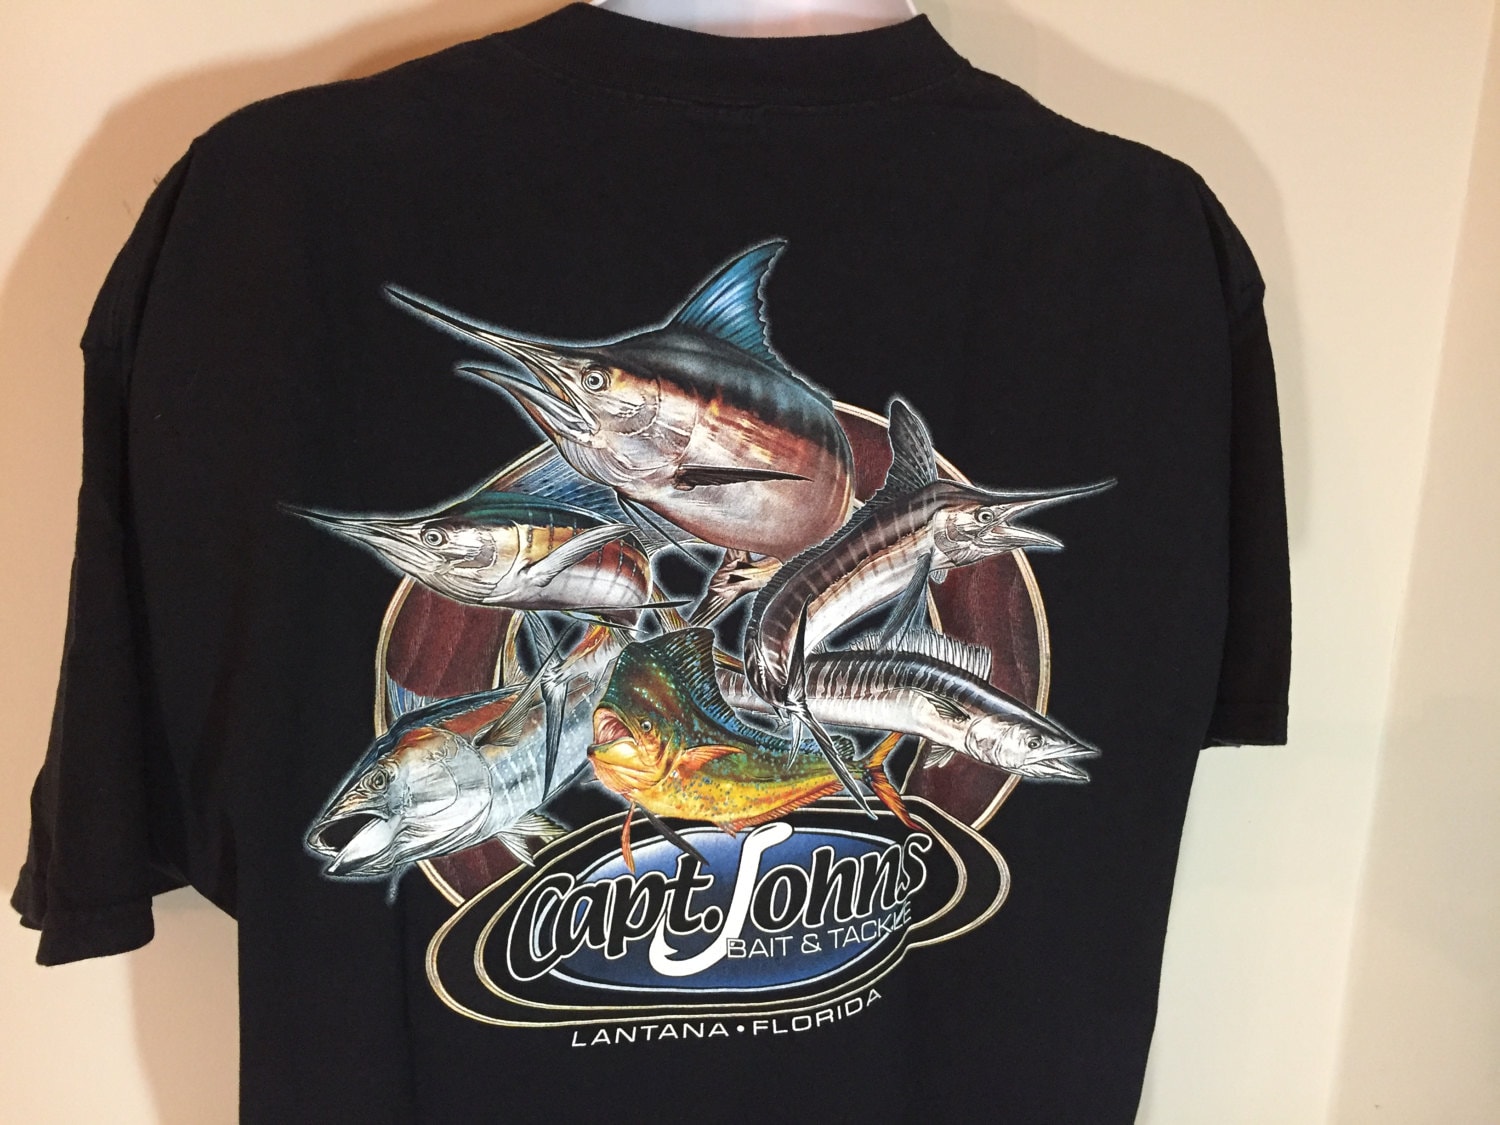 CAPT. JOHNS Bait & Tackle Lantana, Florida Pocket Tee T Shirt Adult XL Y 